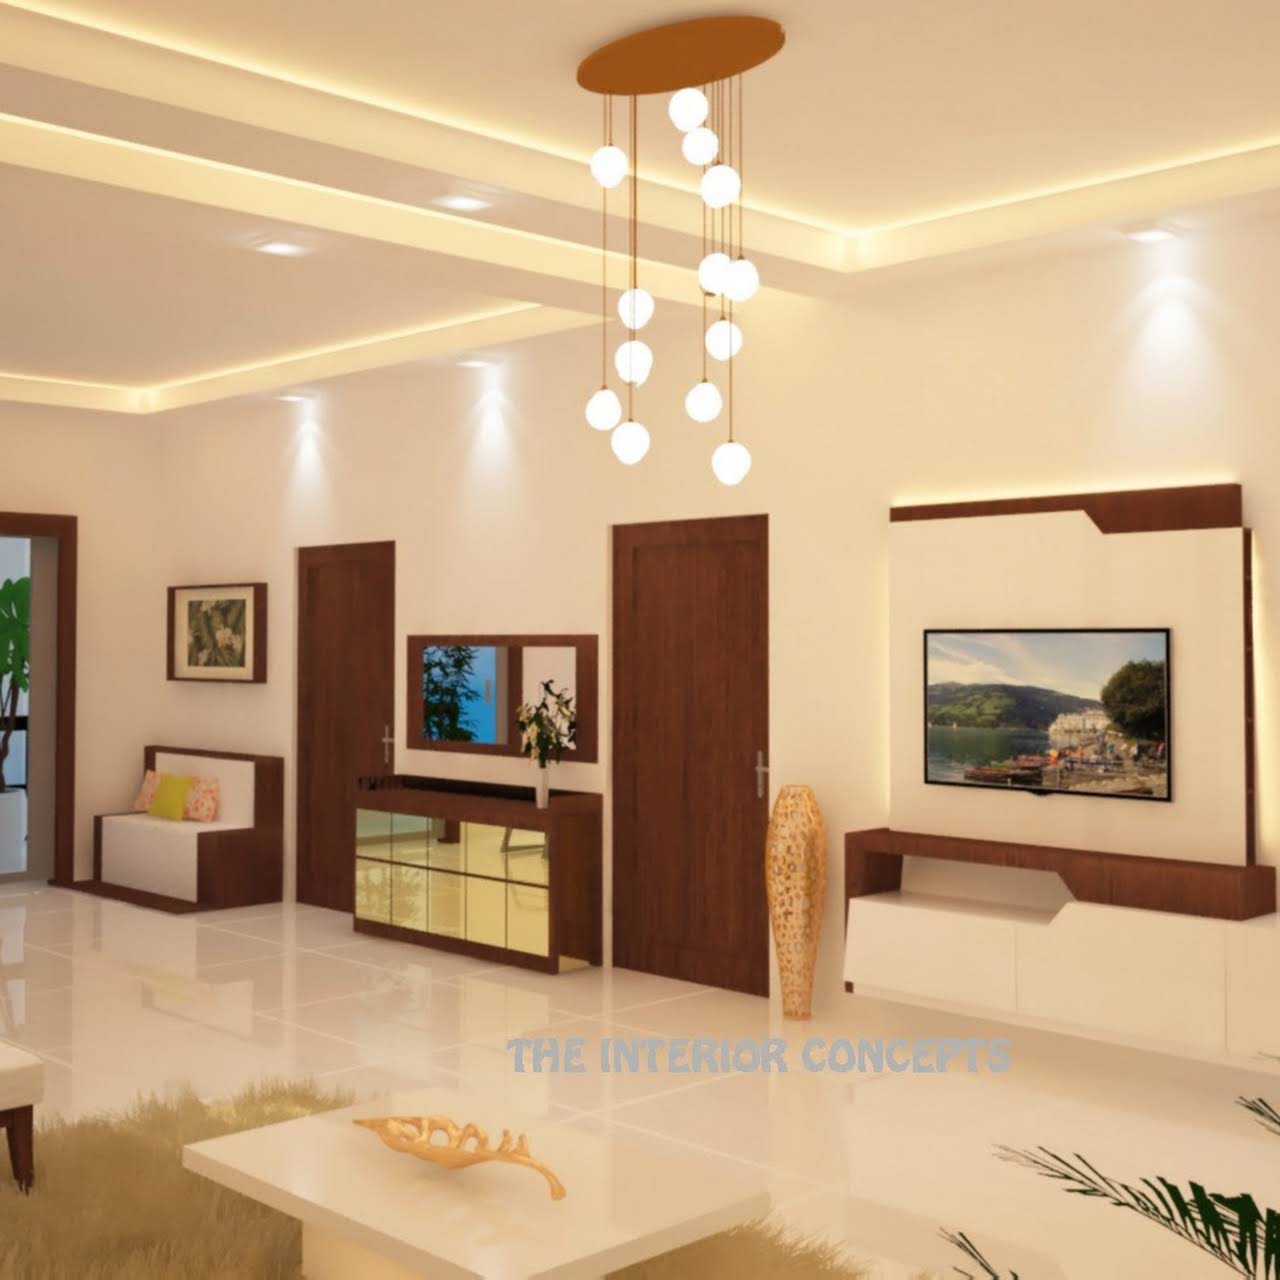 The Interior Concept - Home Interior Designer